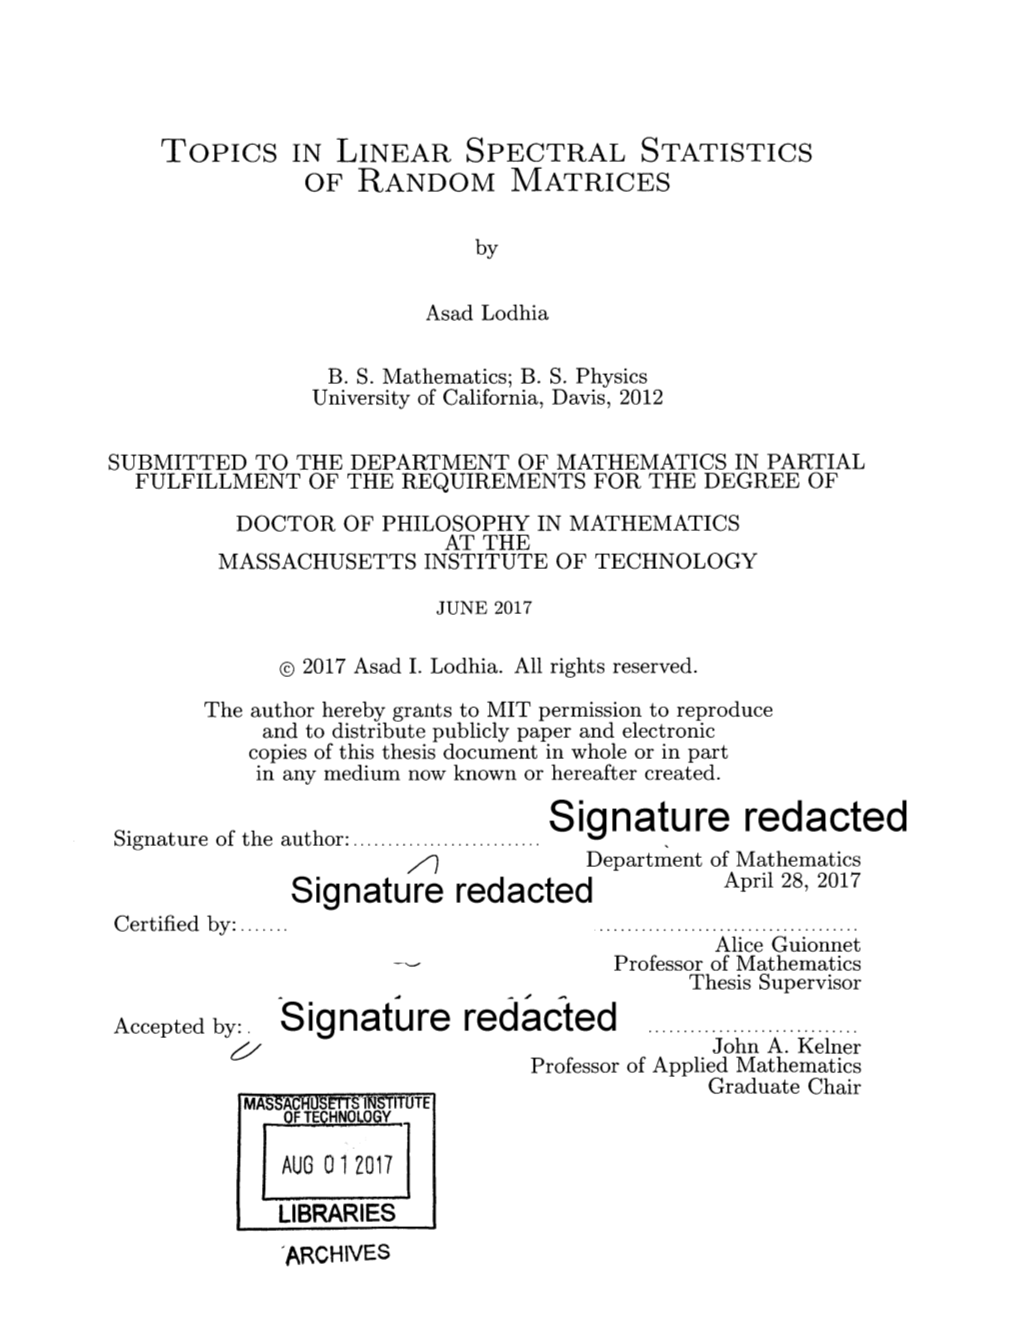 Signature Redacted Department of Mathematics Signature Reda Cted April 28, 2017 Certified By: